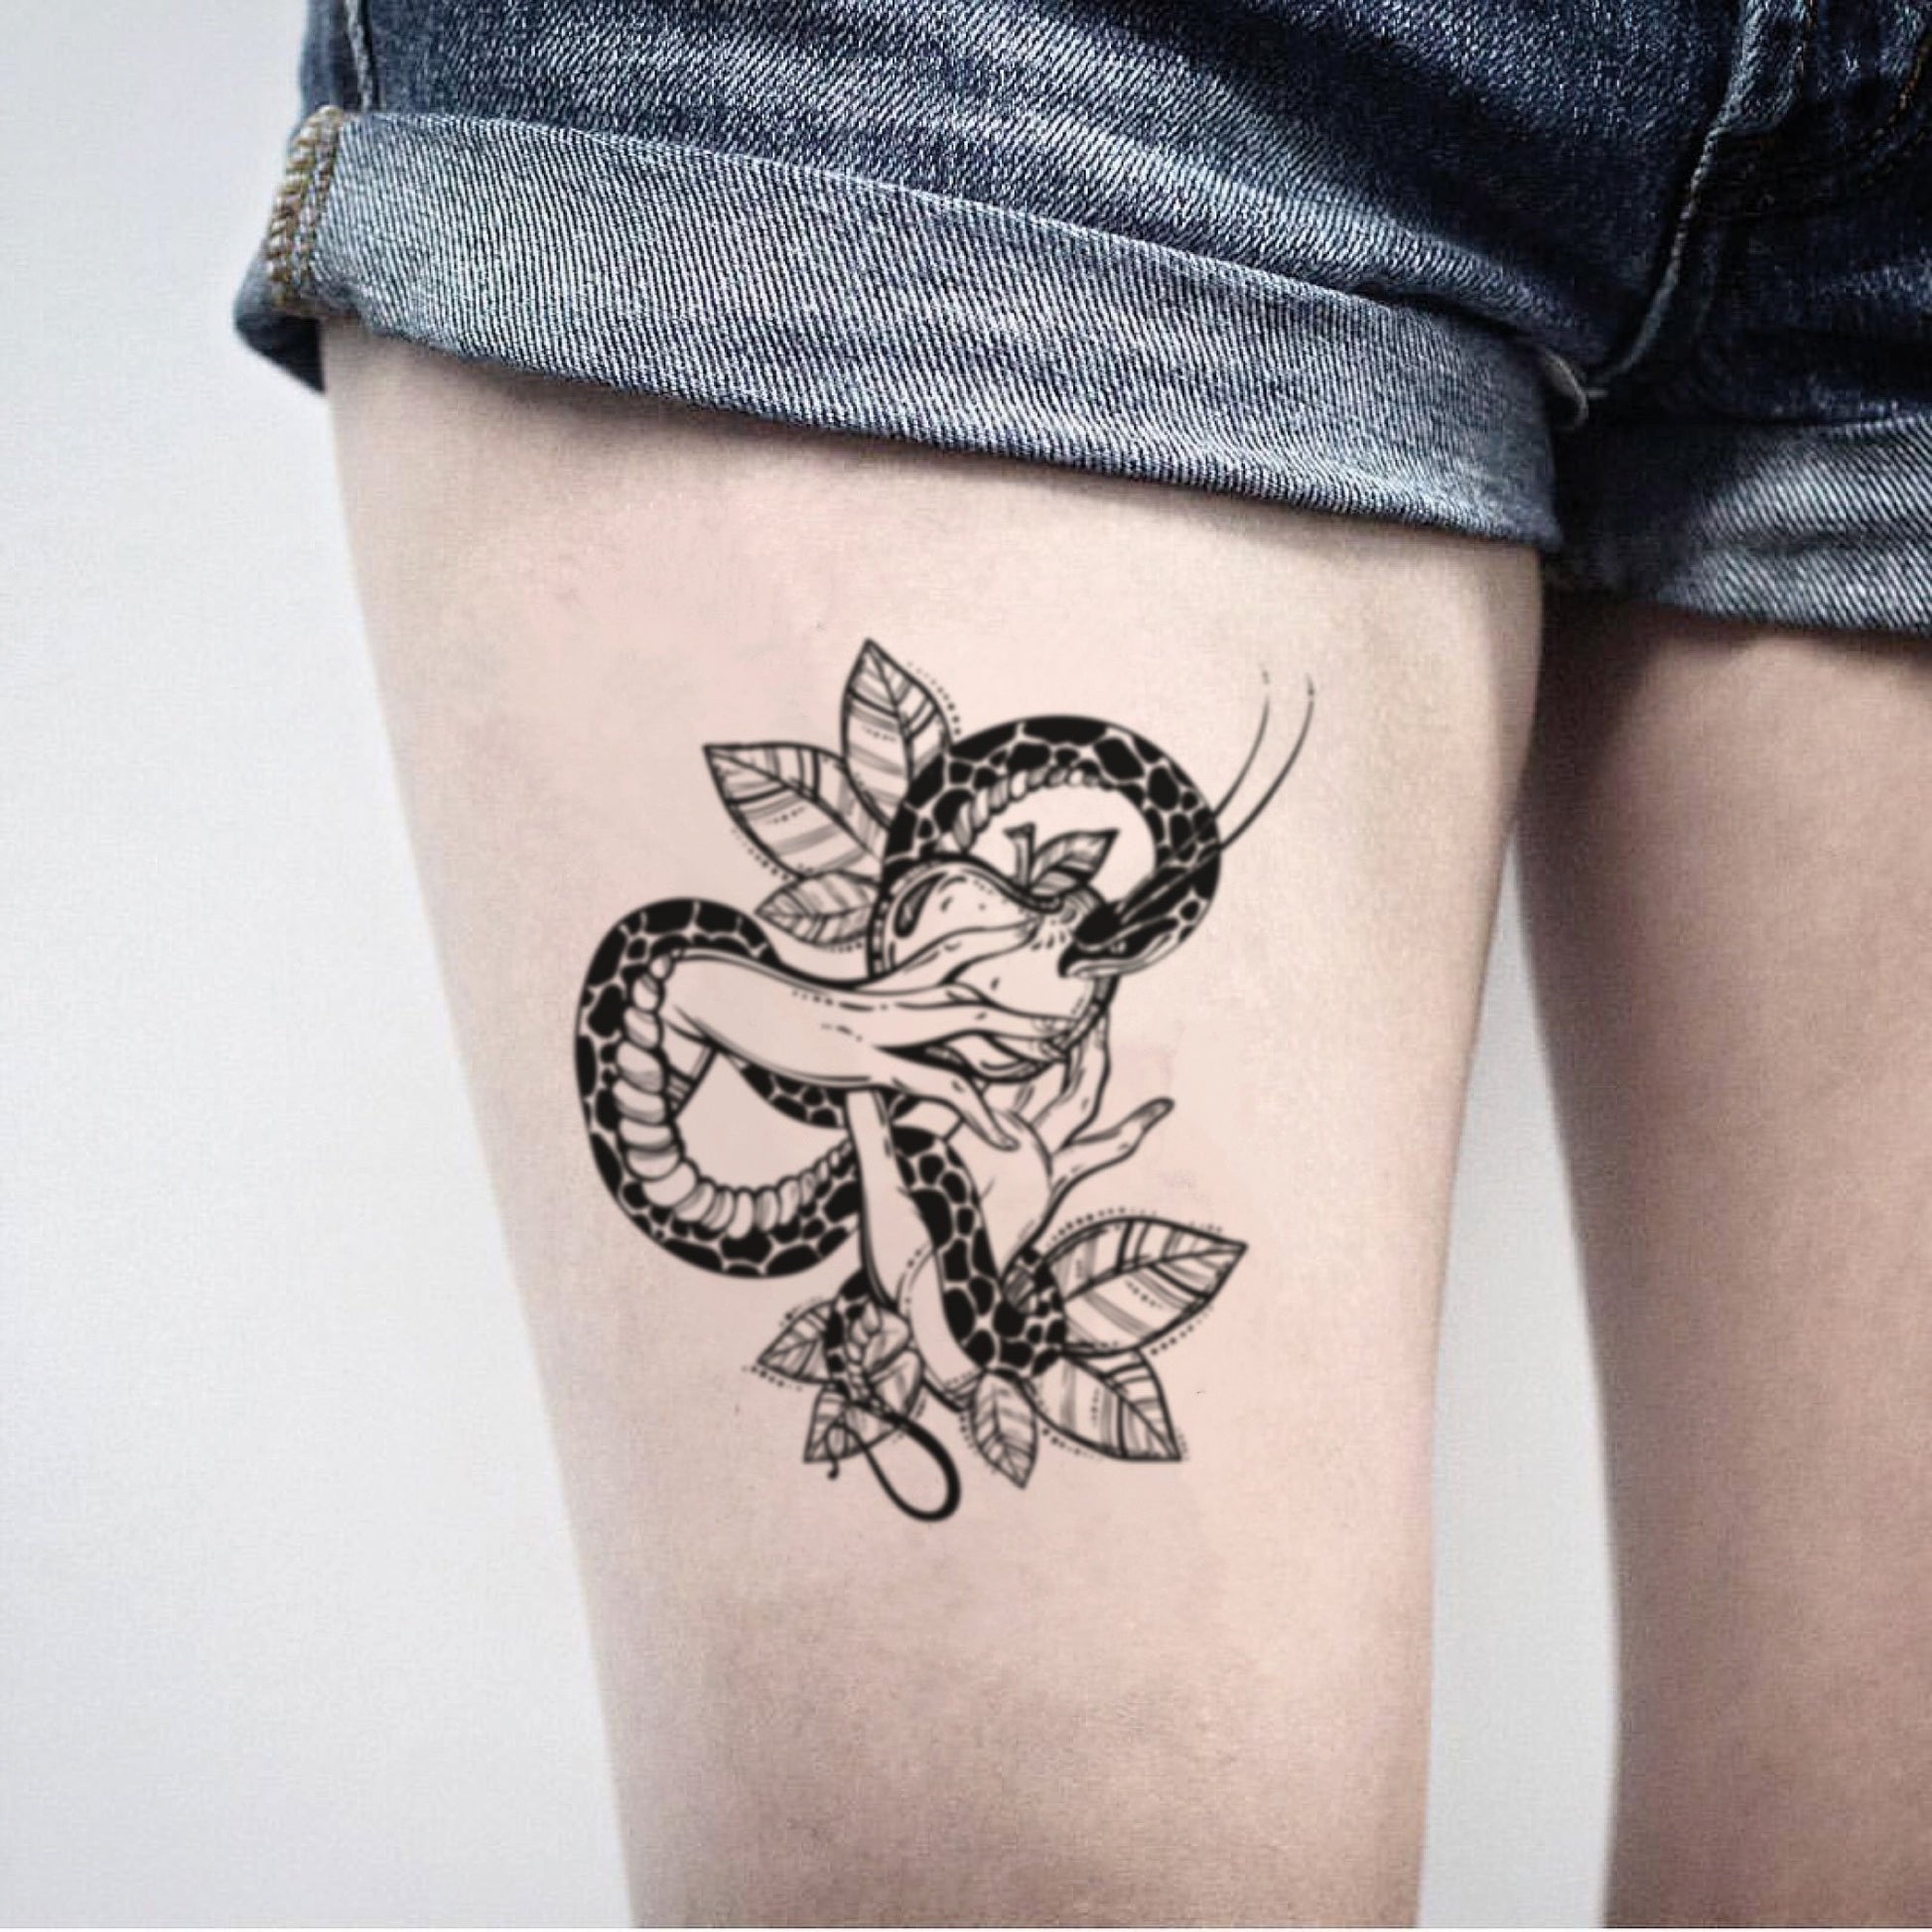 fake big forbidden fruit garden of eden love illustrative temporary tattoo sticker design idea on thigh